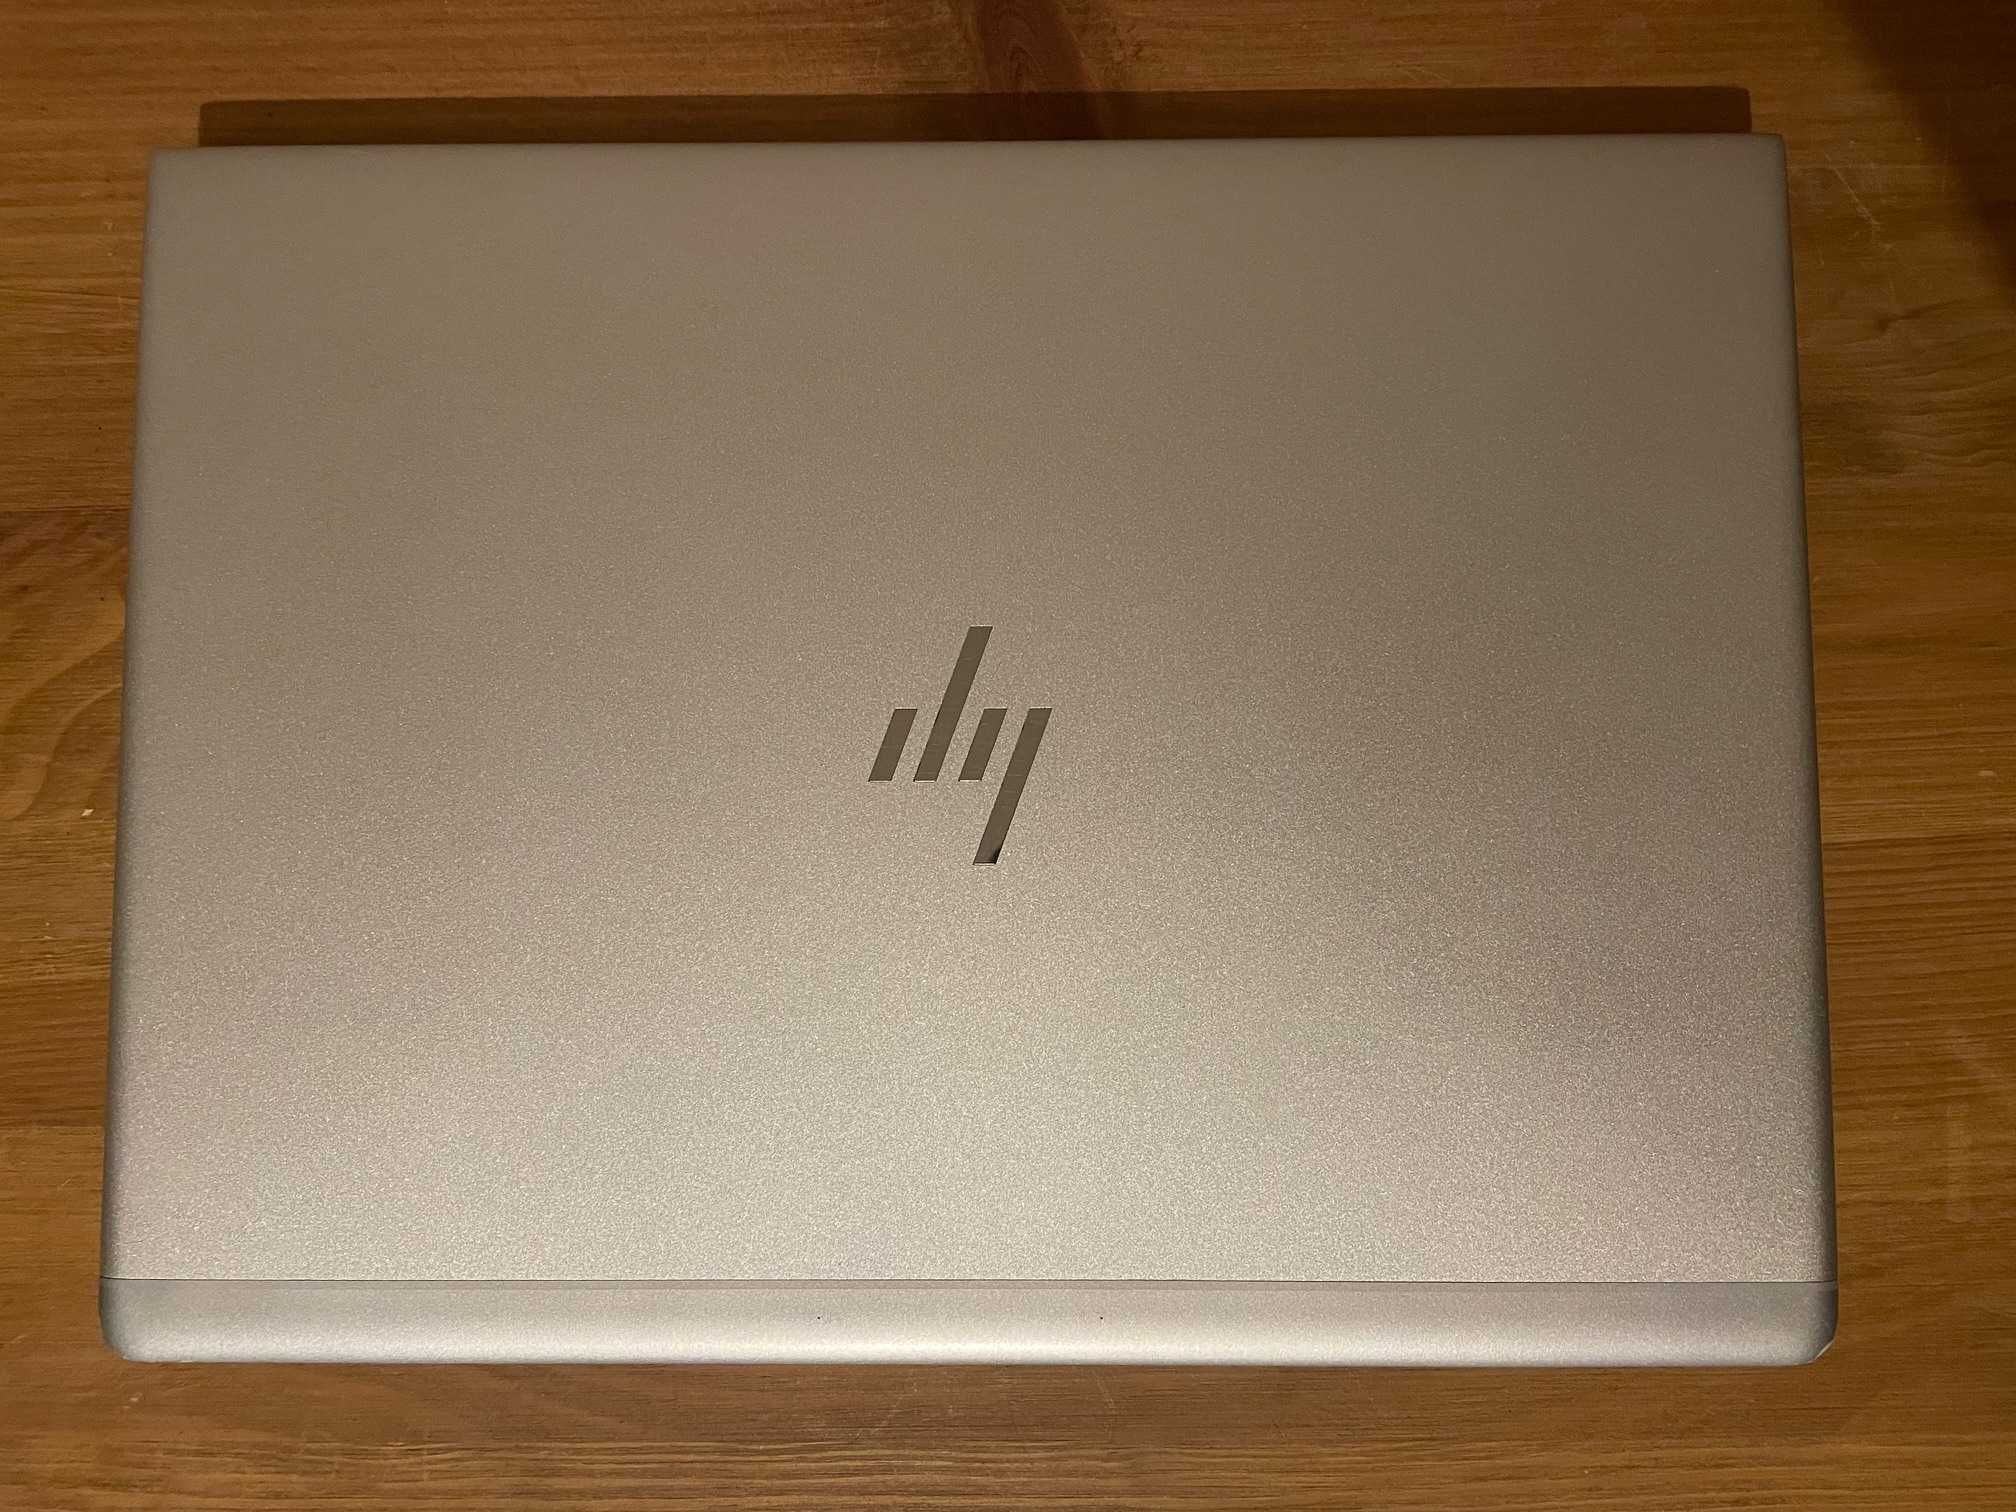 Laptop HP EliteBook 830 G5